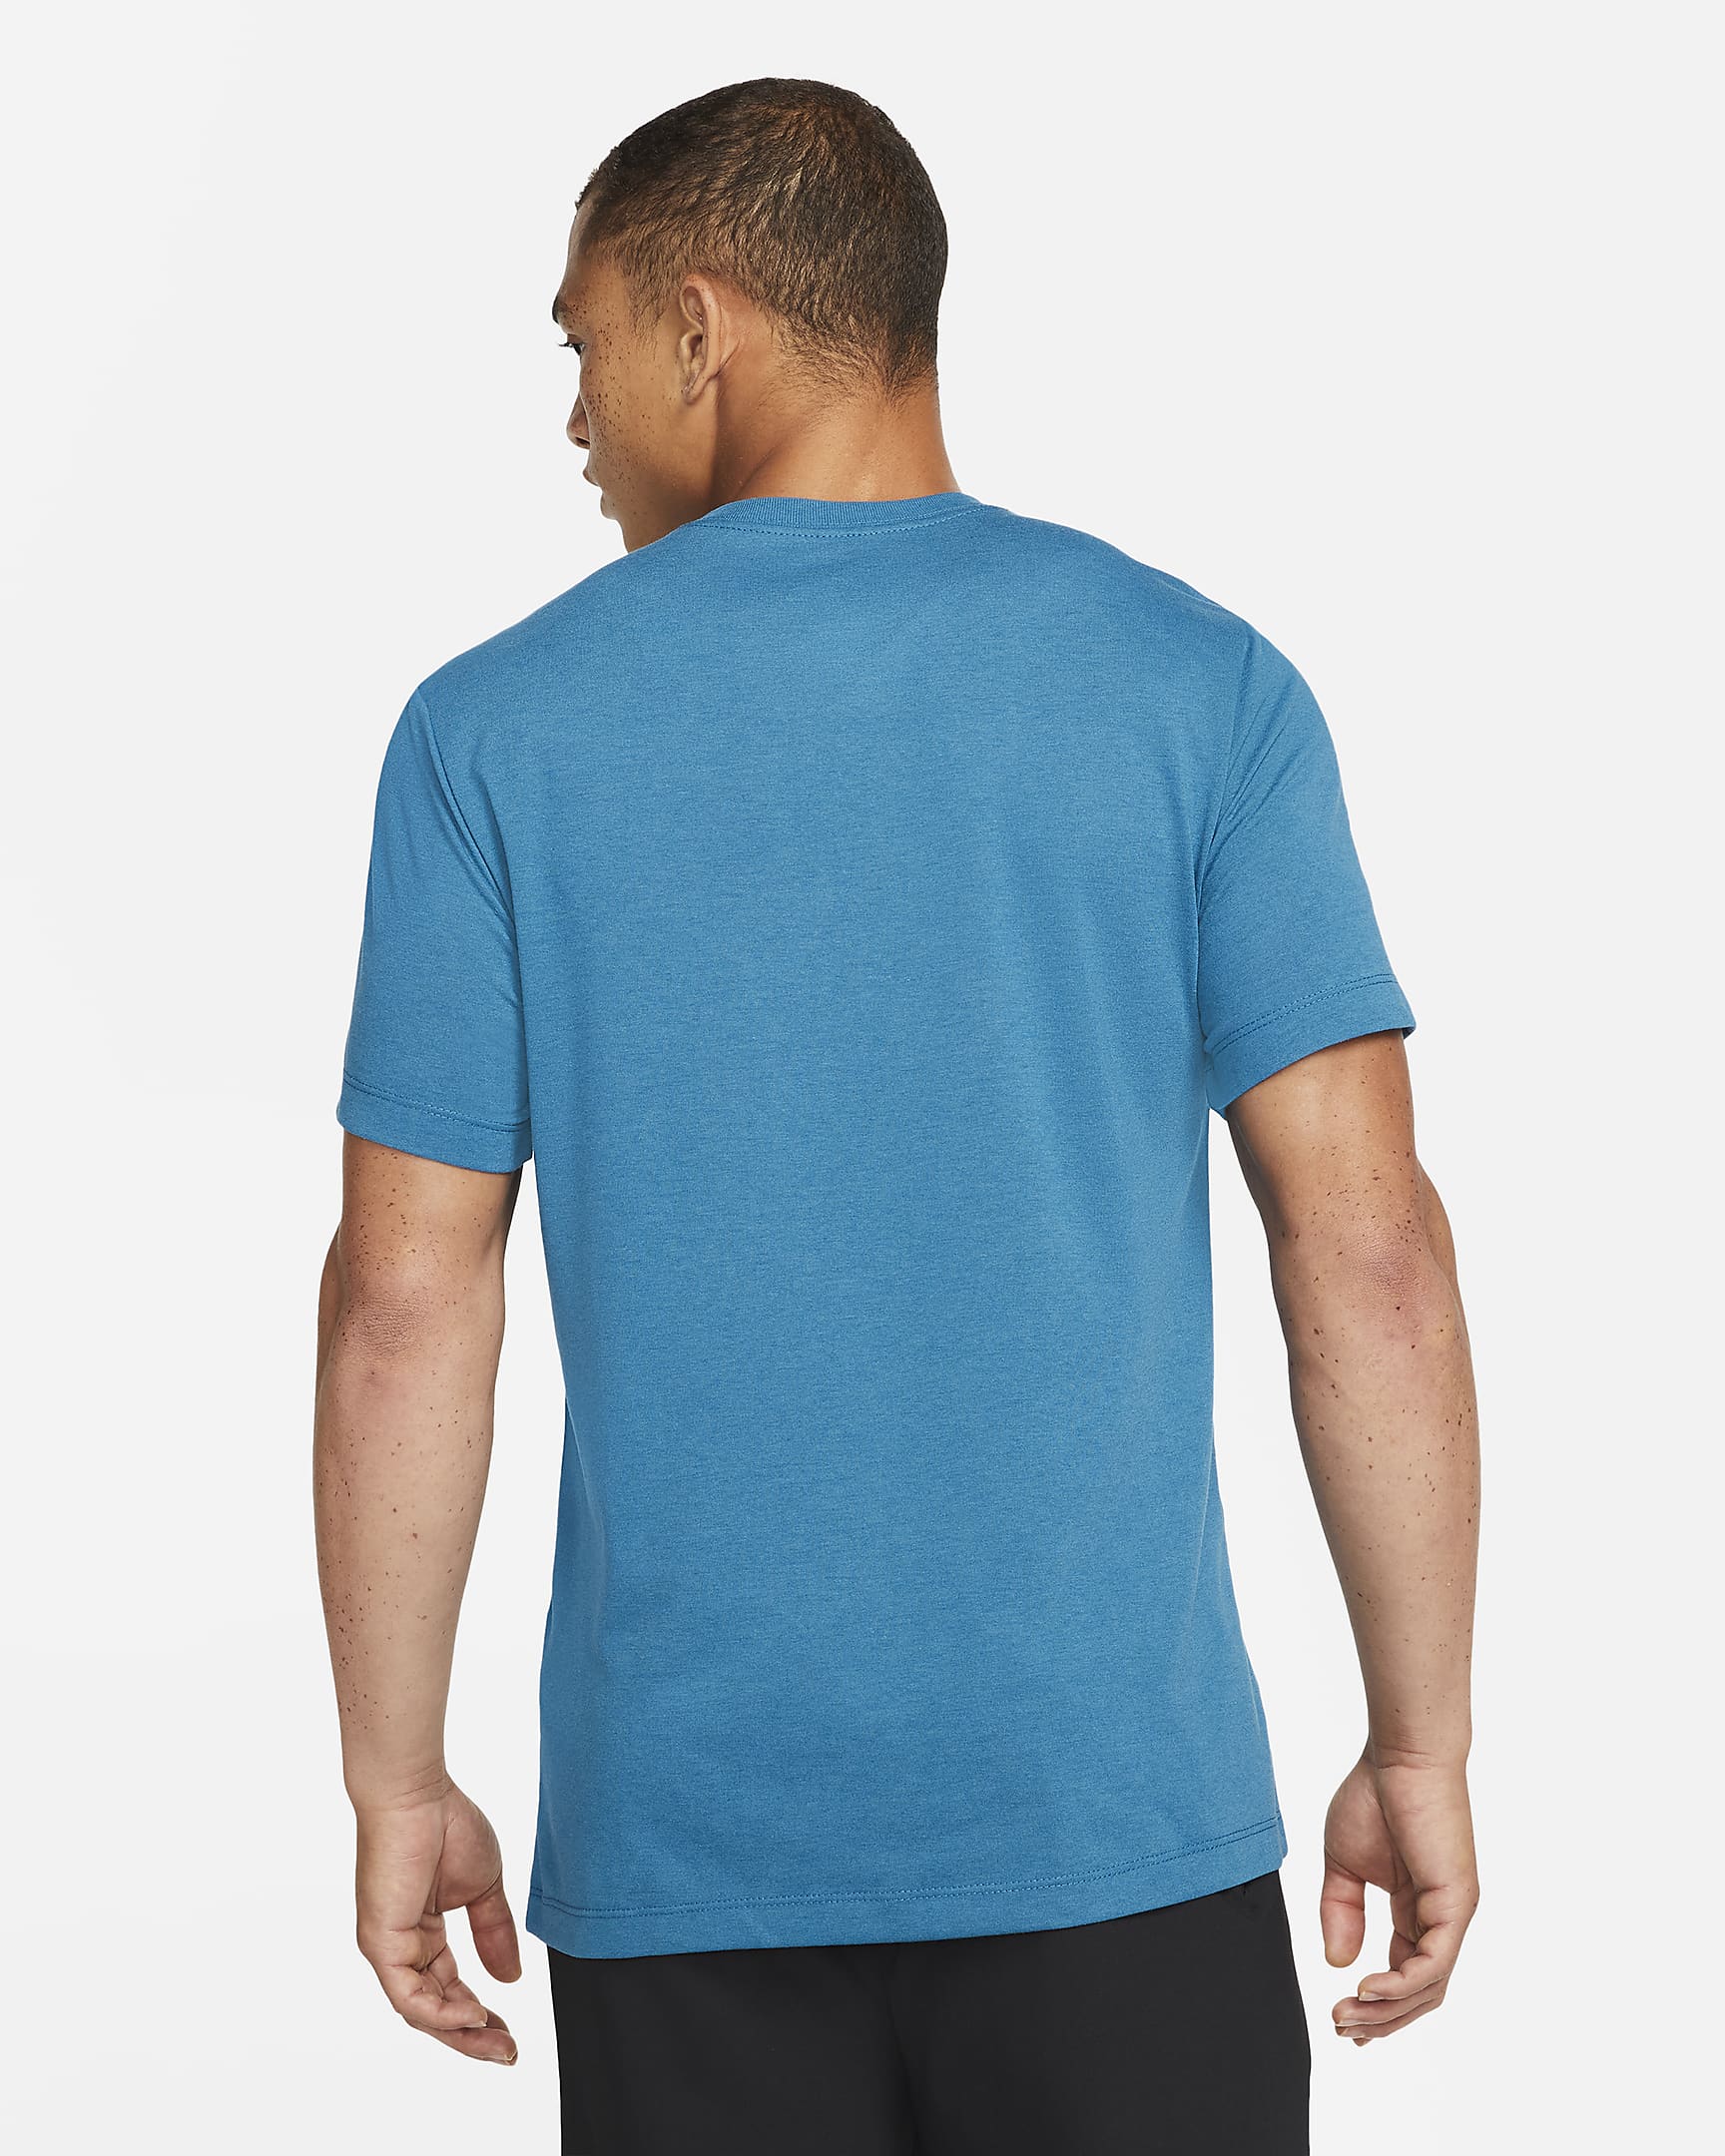 Nike Dri-FIT Men's Training T-Shirt - Industrial Blue